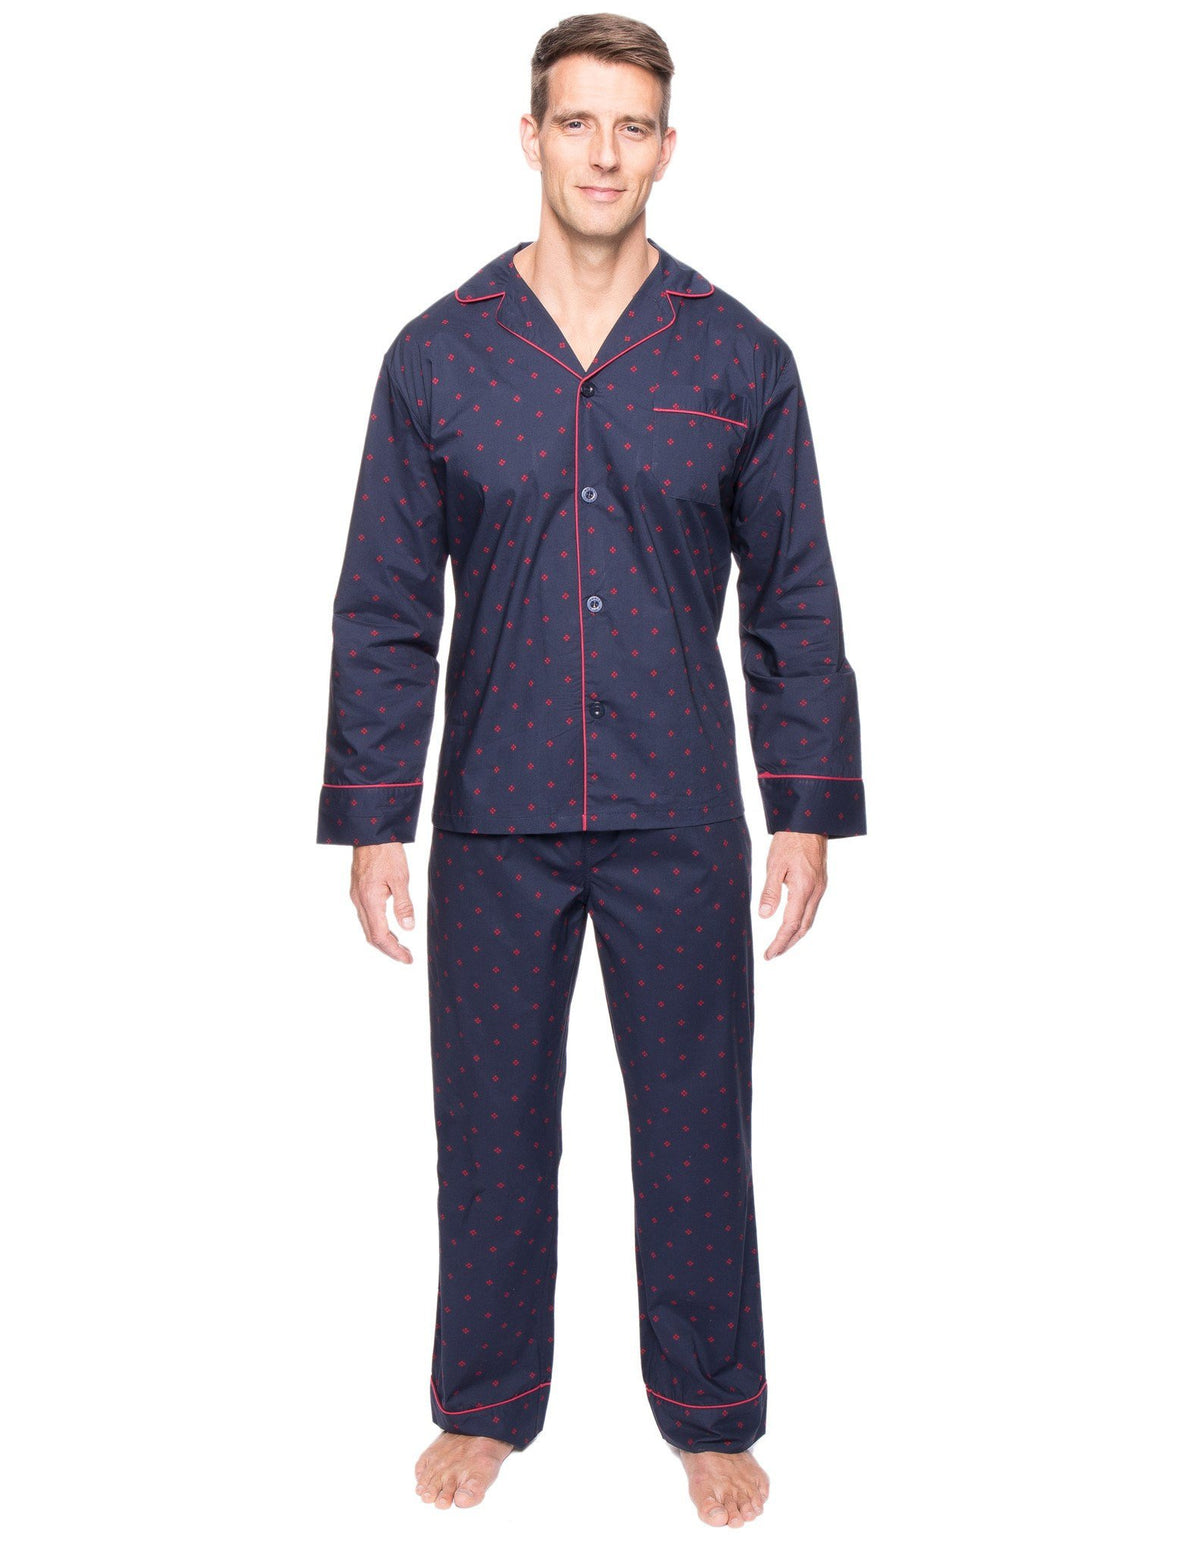 Men's Premium 100% Cotton Woven Pajama Sleepwear Set - Diamond Checks Black/Red